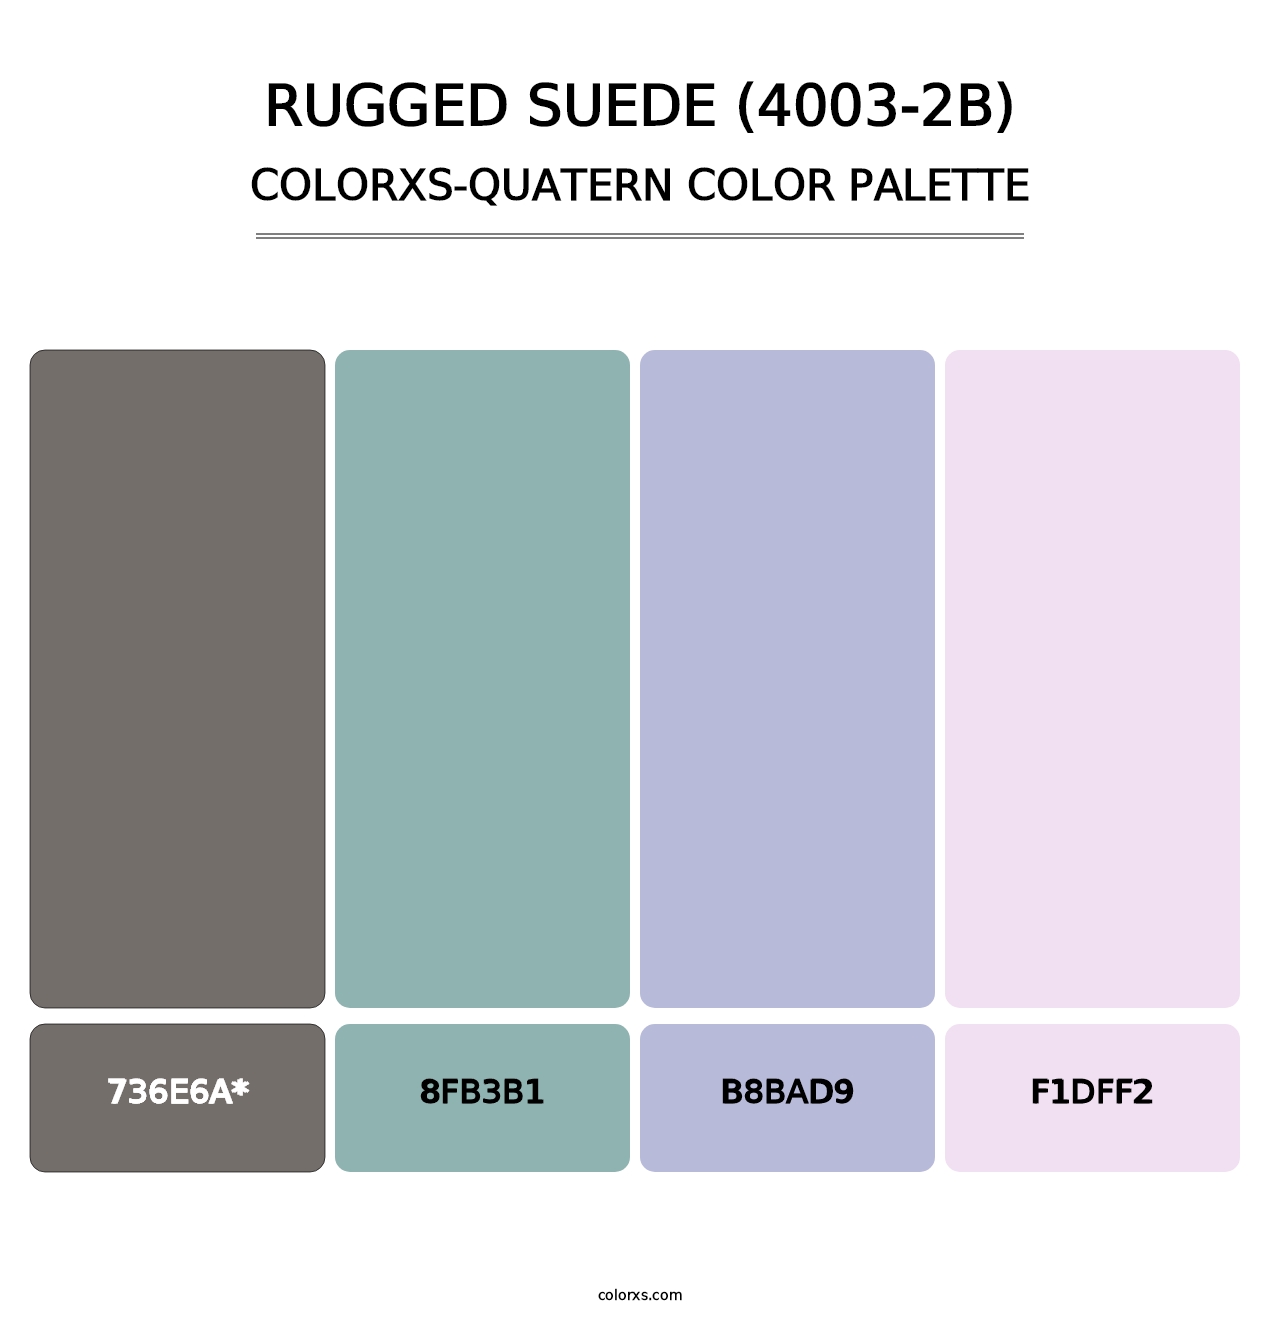 Rugged Suede (4003-2B) - Colorxs Quatern Palette